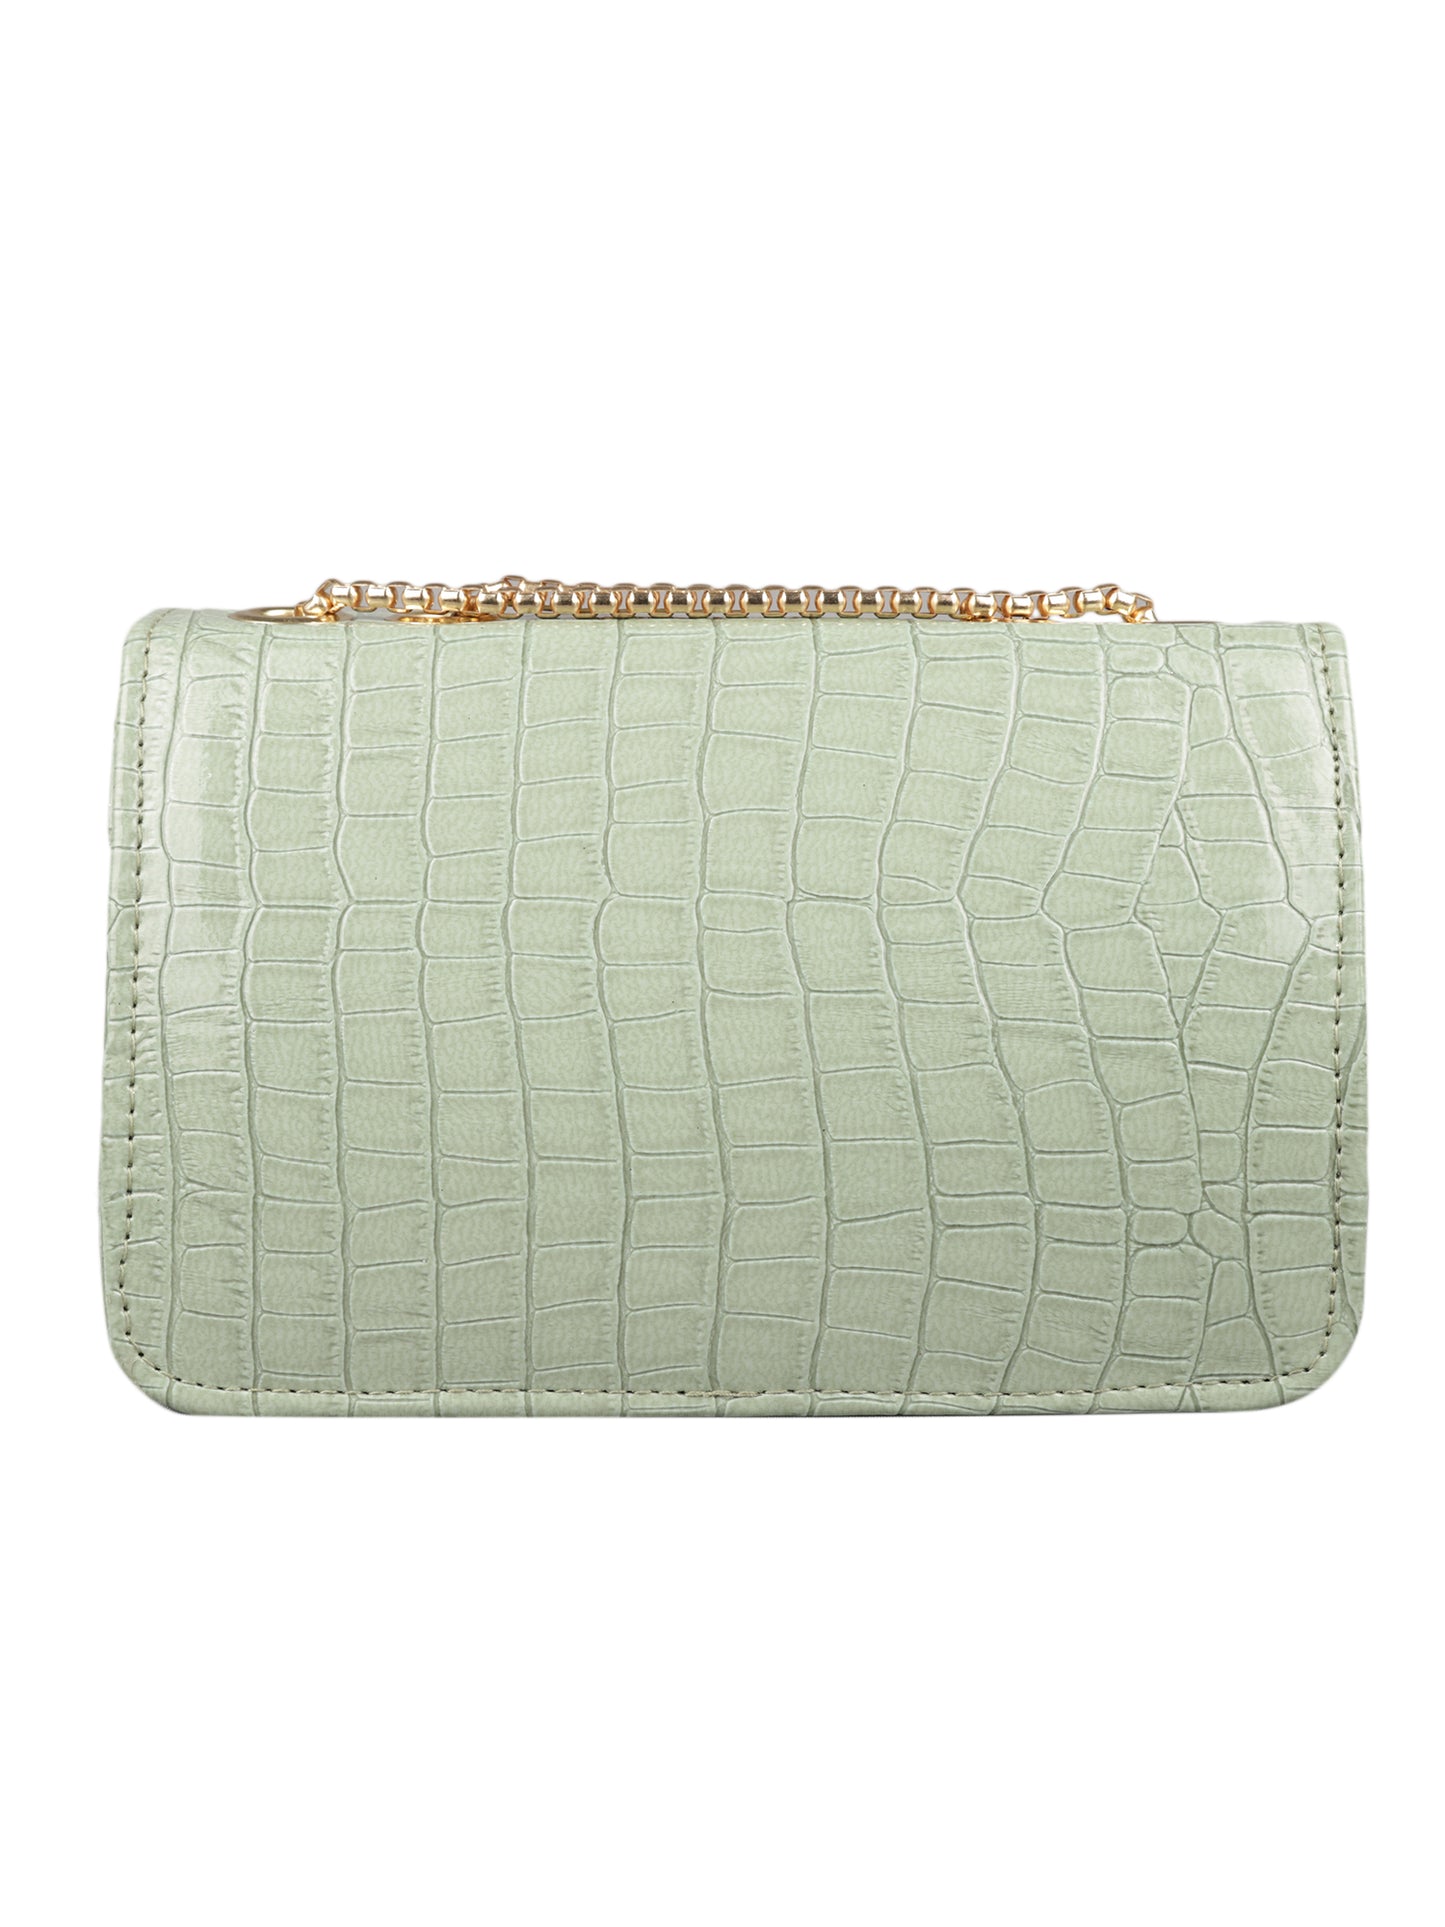 MINI WESST Women's Green Handbags(MWHB014GR)